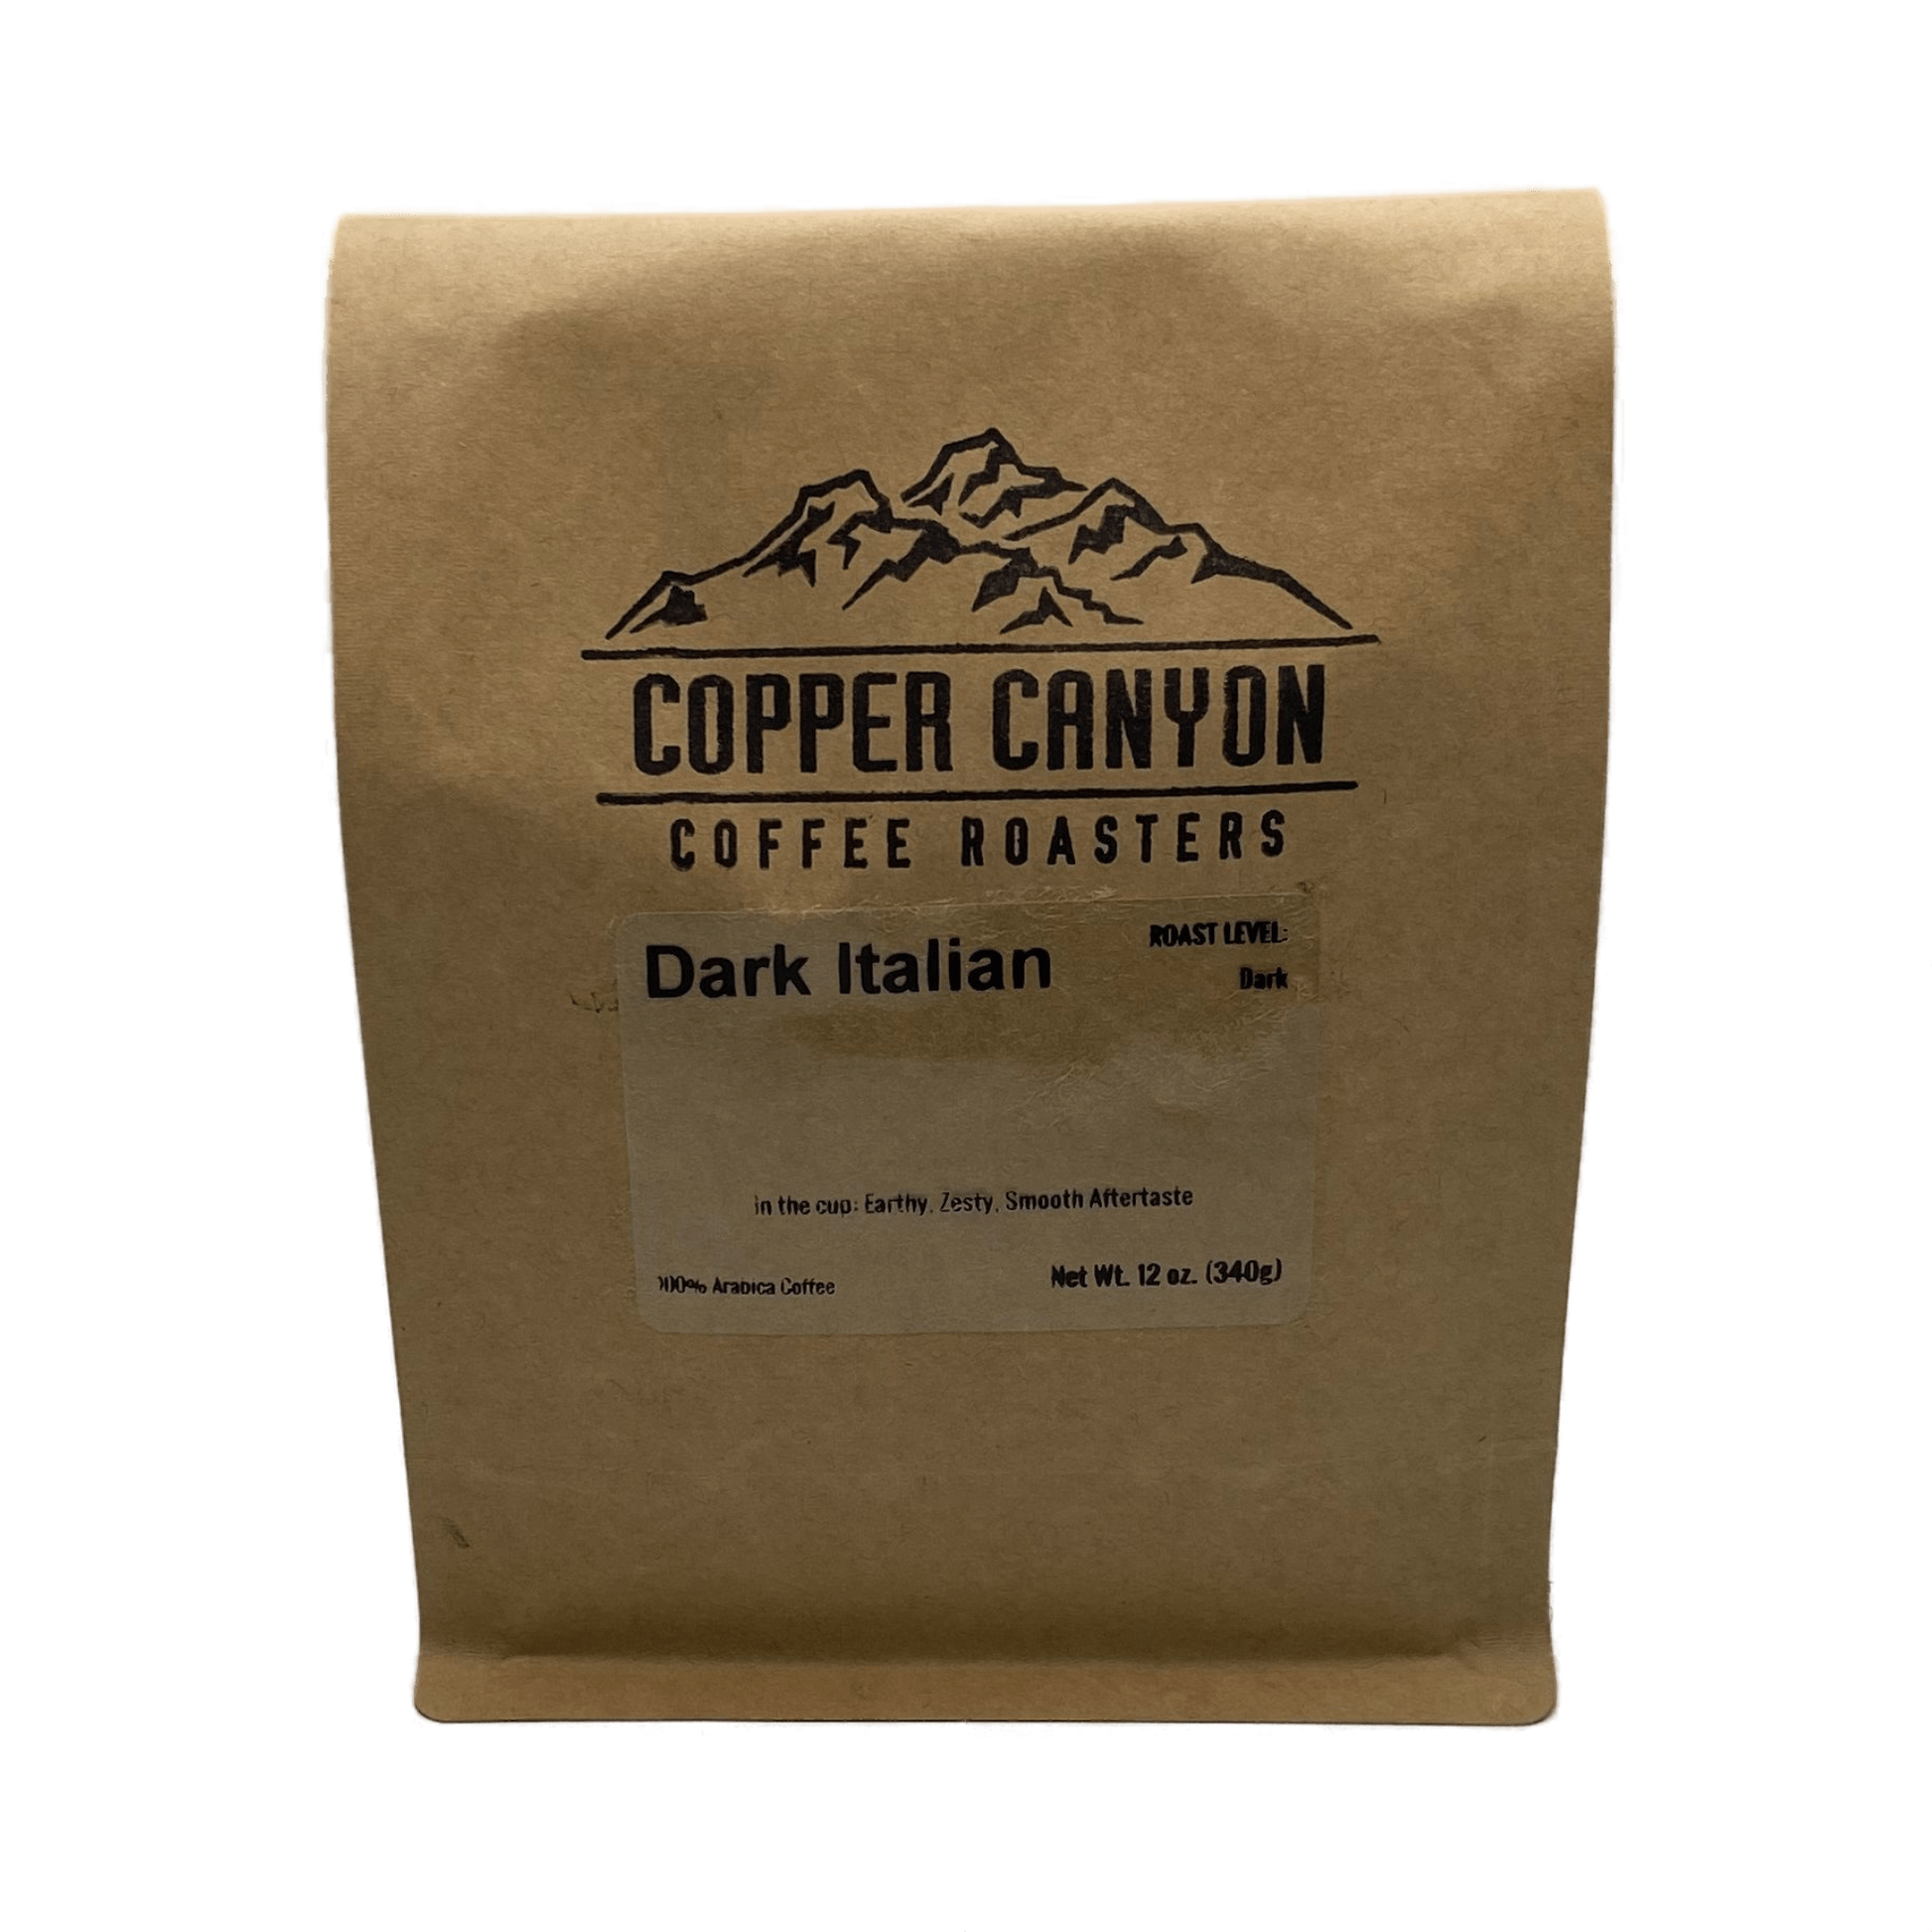 12 oz bag of Dark Italian, single origin, dark roast coffee